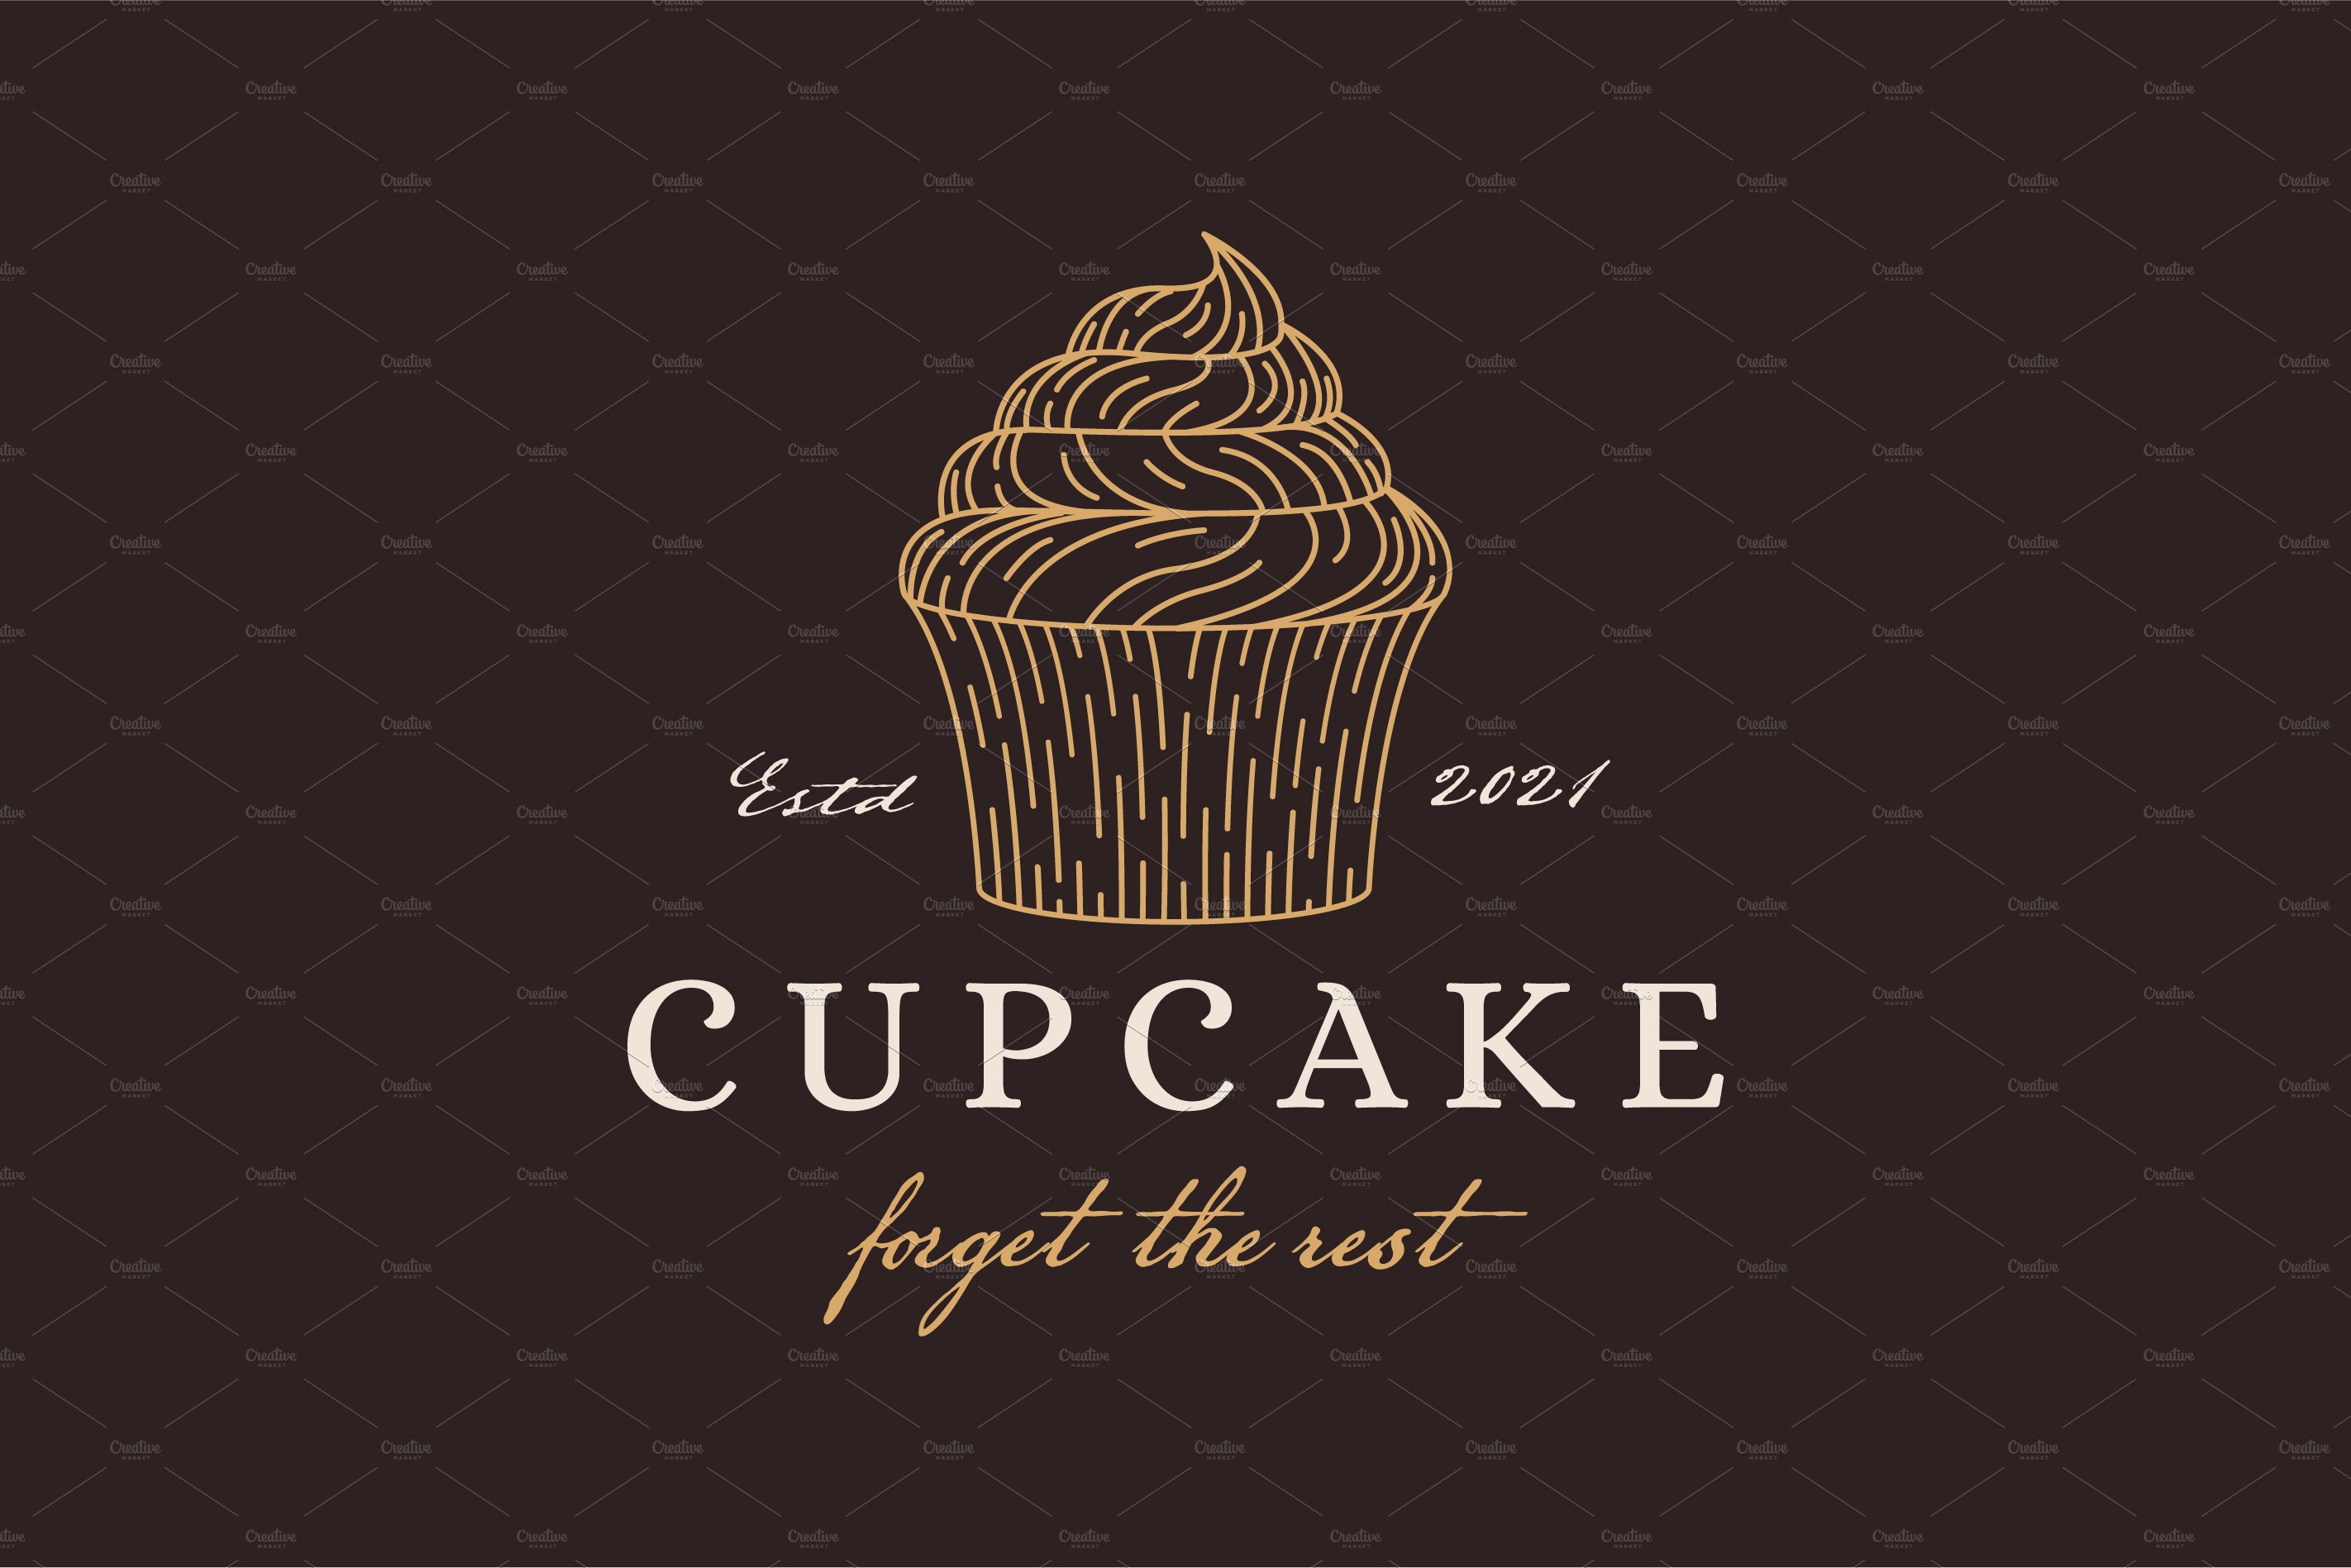 Vintage line art cupcake logo icon cover image.